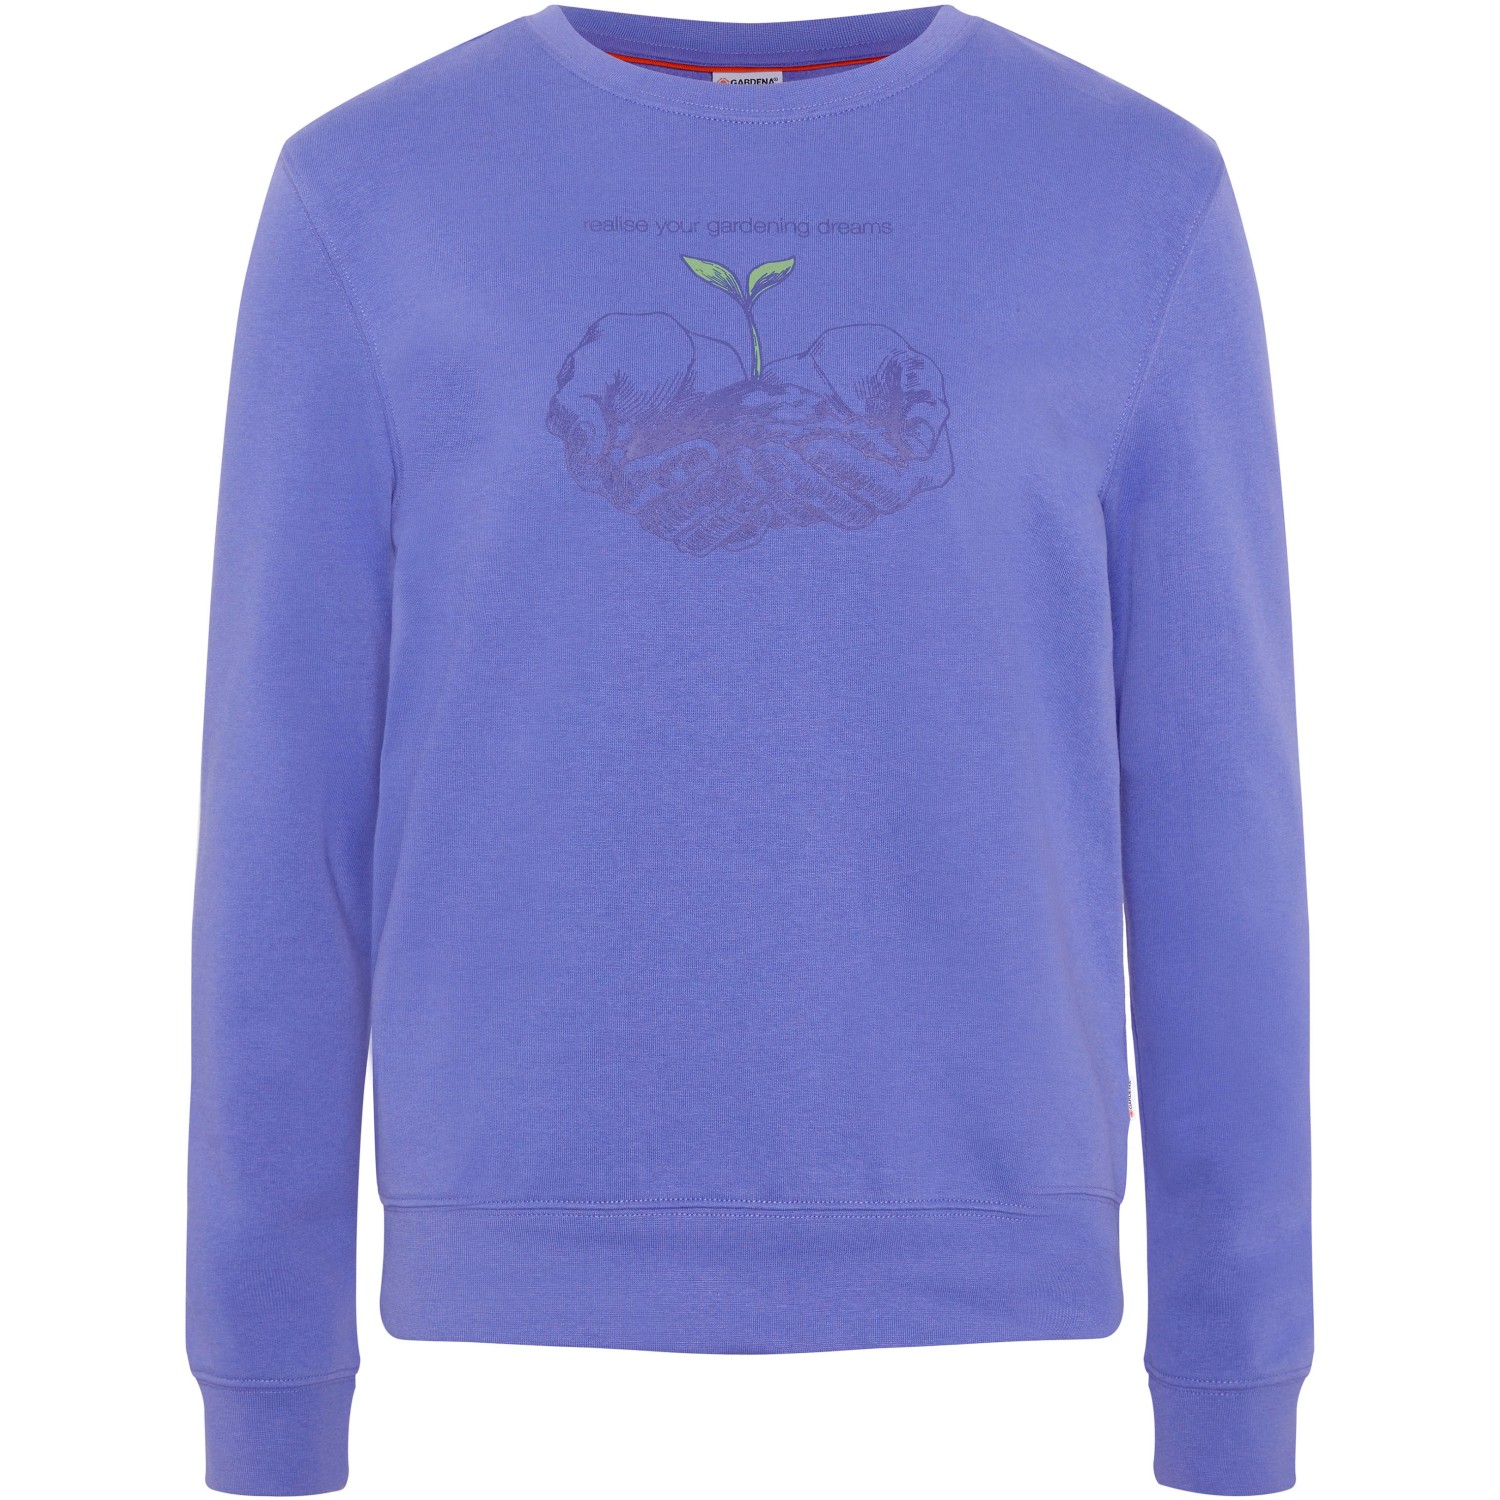 Gardena Women Sweatshirt Fit Regular Very OBI bei kaufen XL Peri Gr